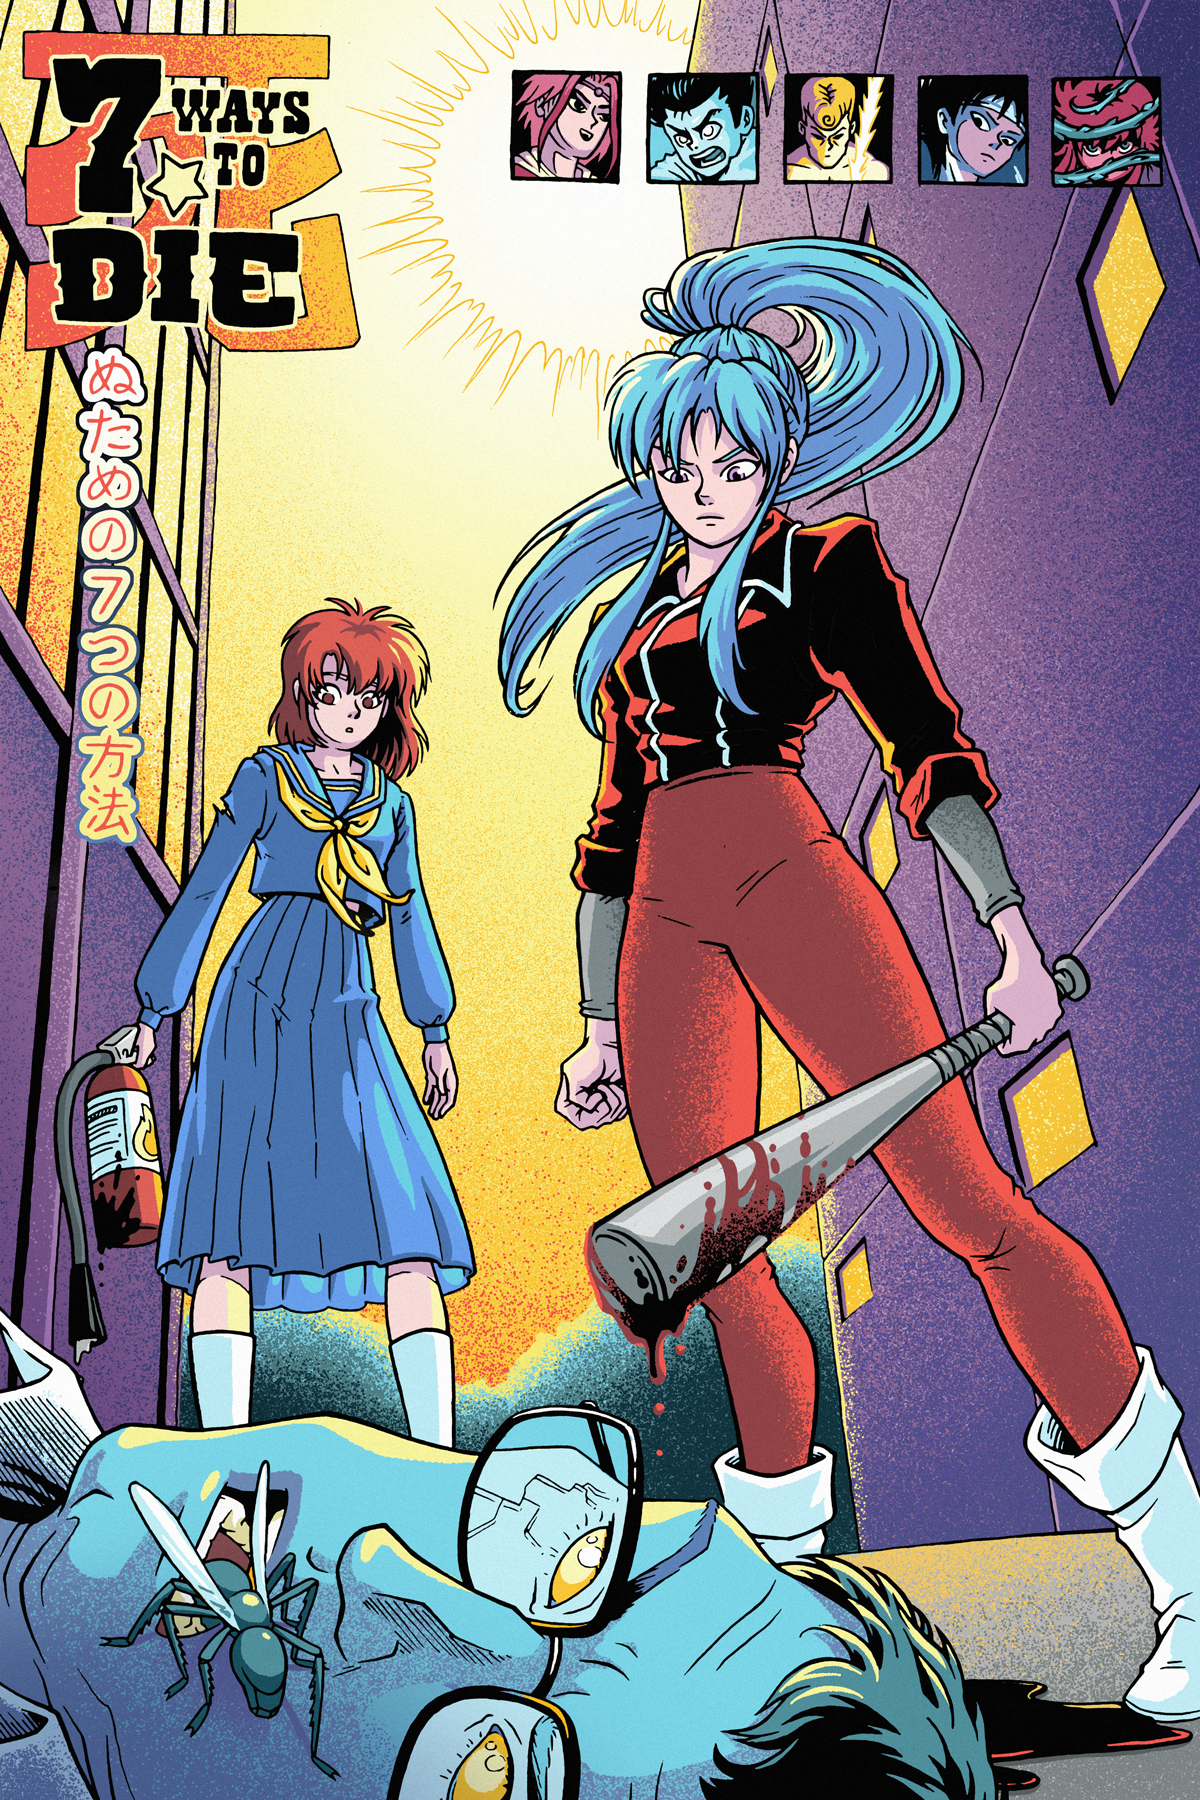 Comic Book Cover comic cover manga anime yu yu hakusho Poster Design fanart